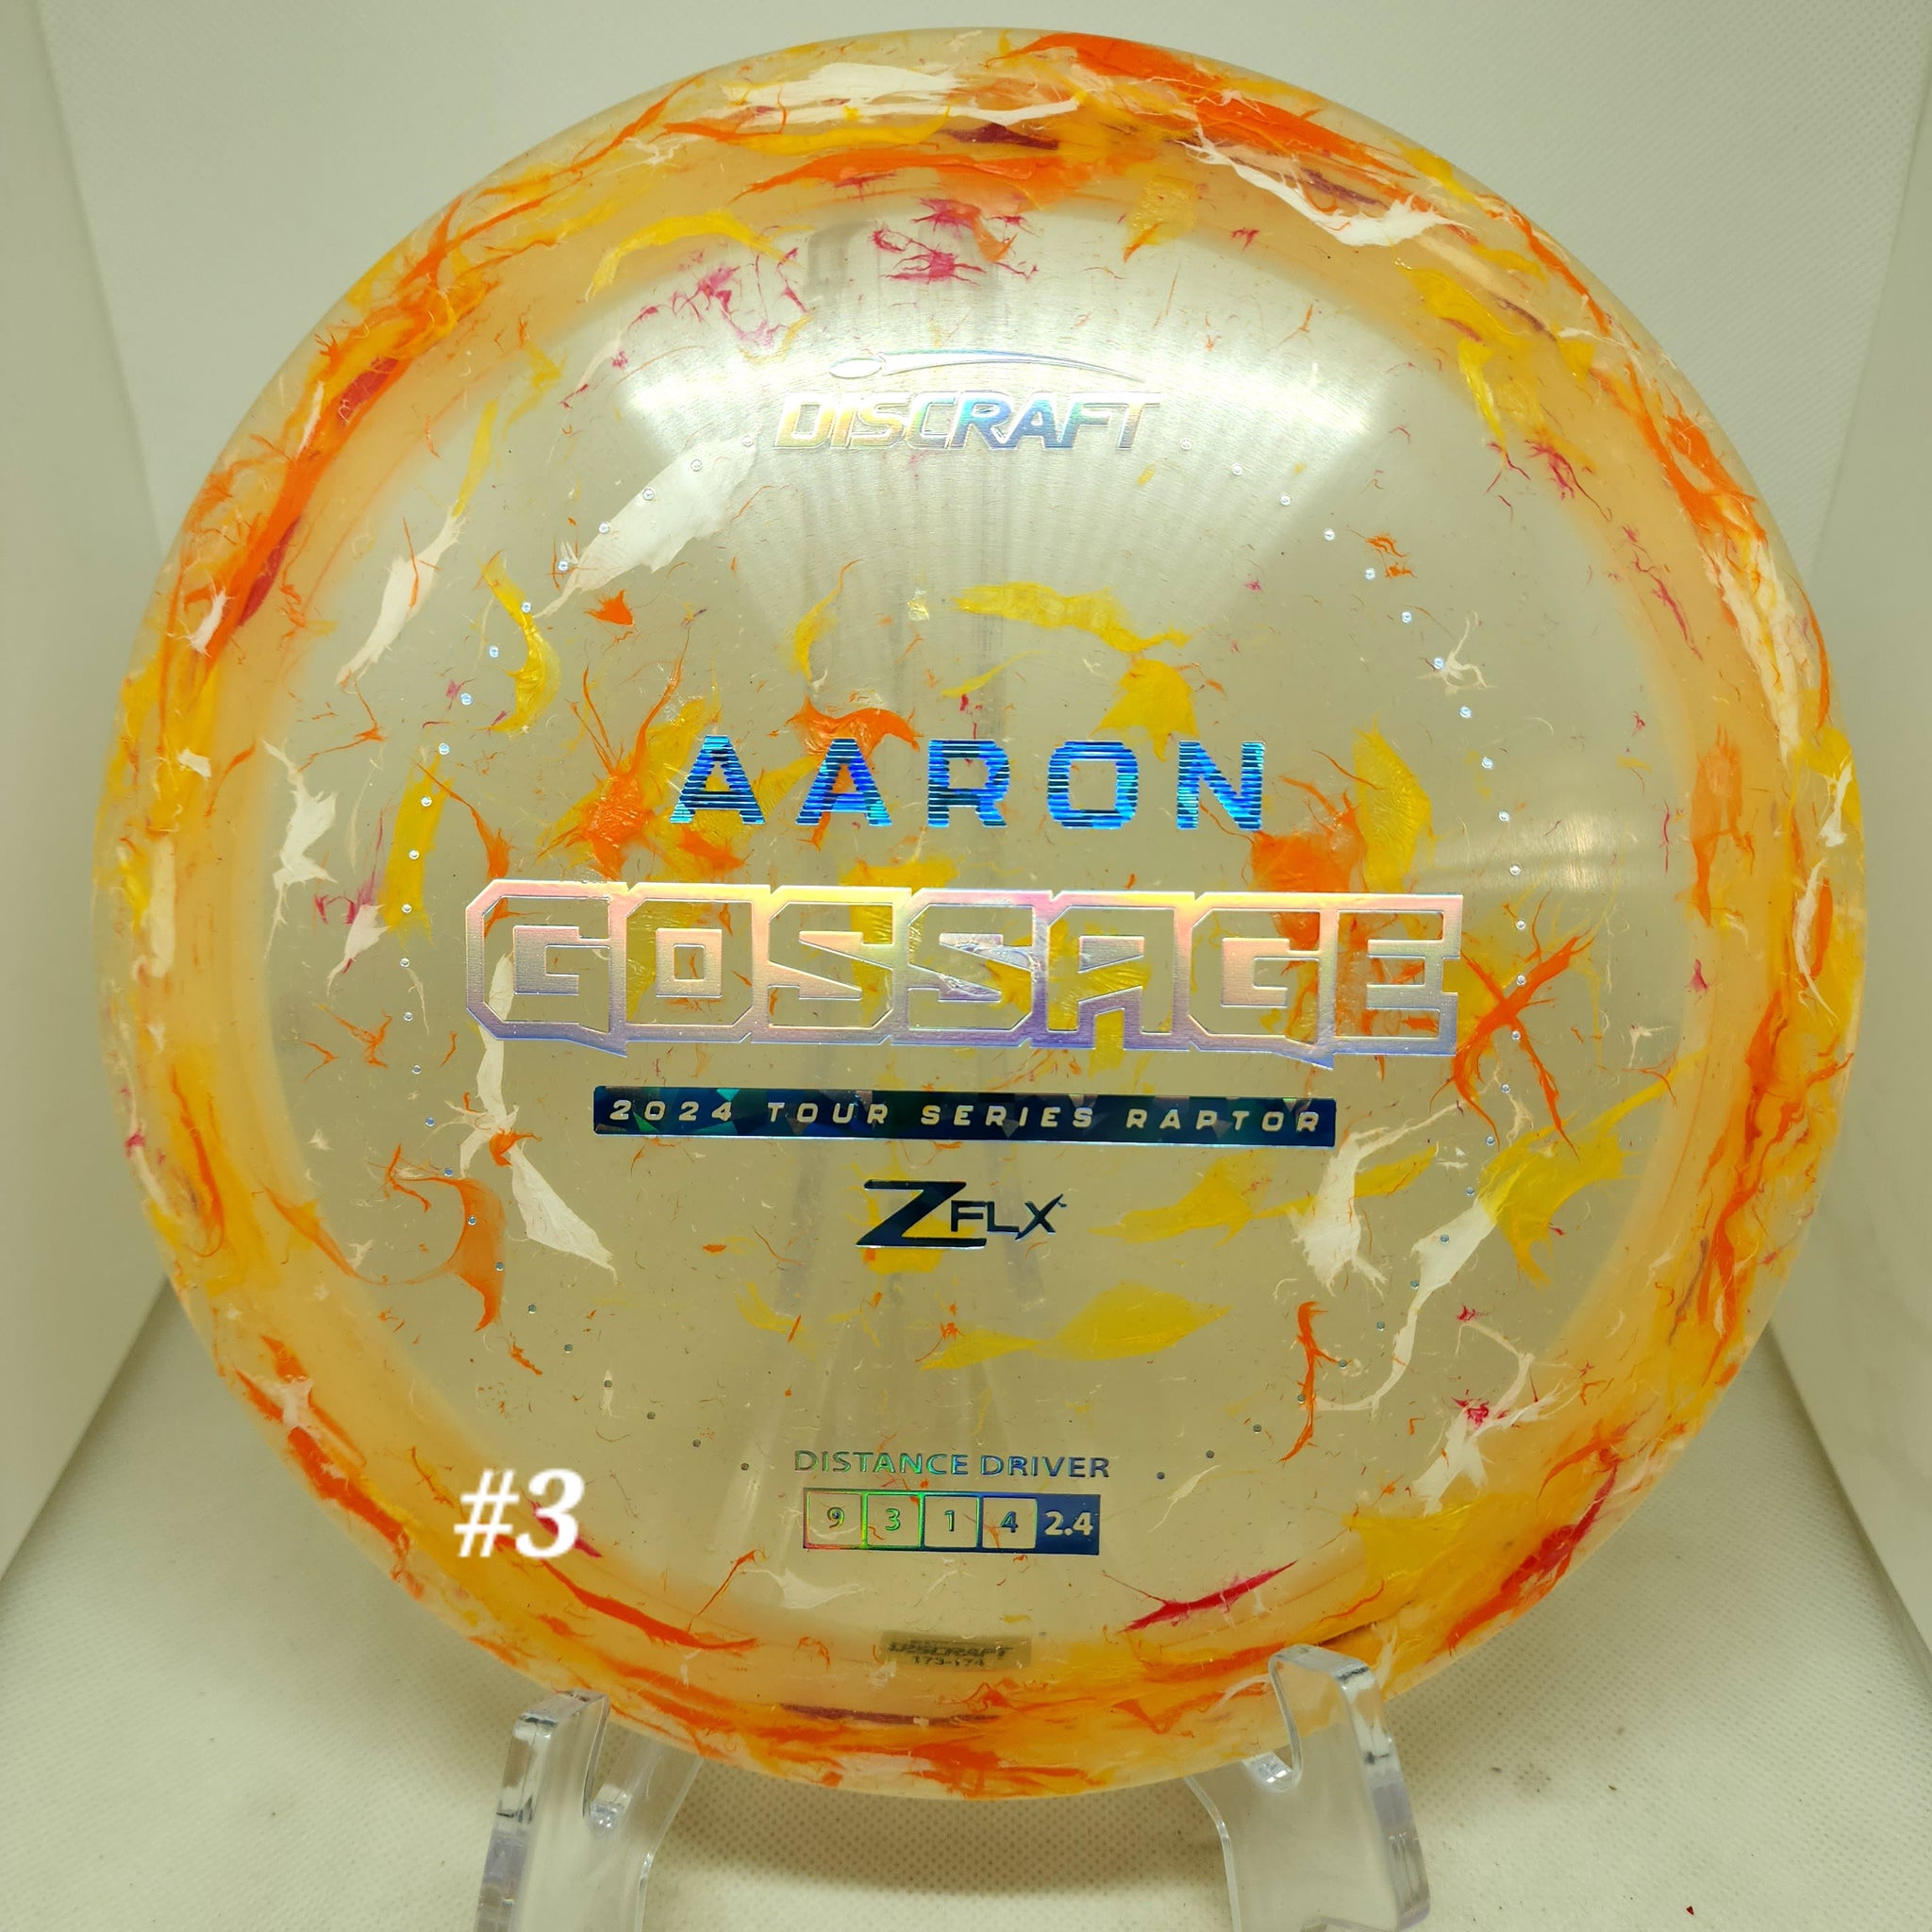 Raptor (Jawbreaker Z FLX) Aaron Gossage Tour Series 2024